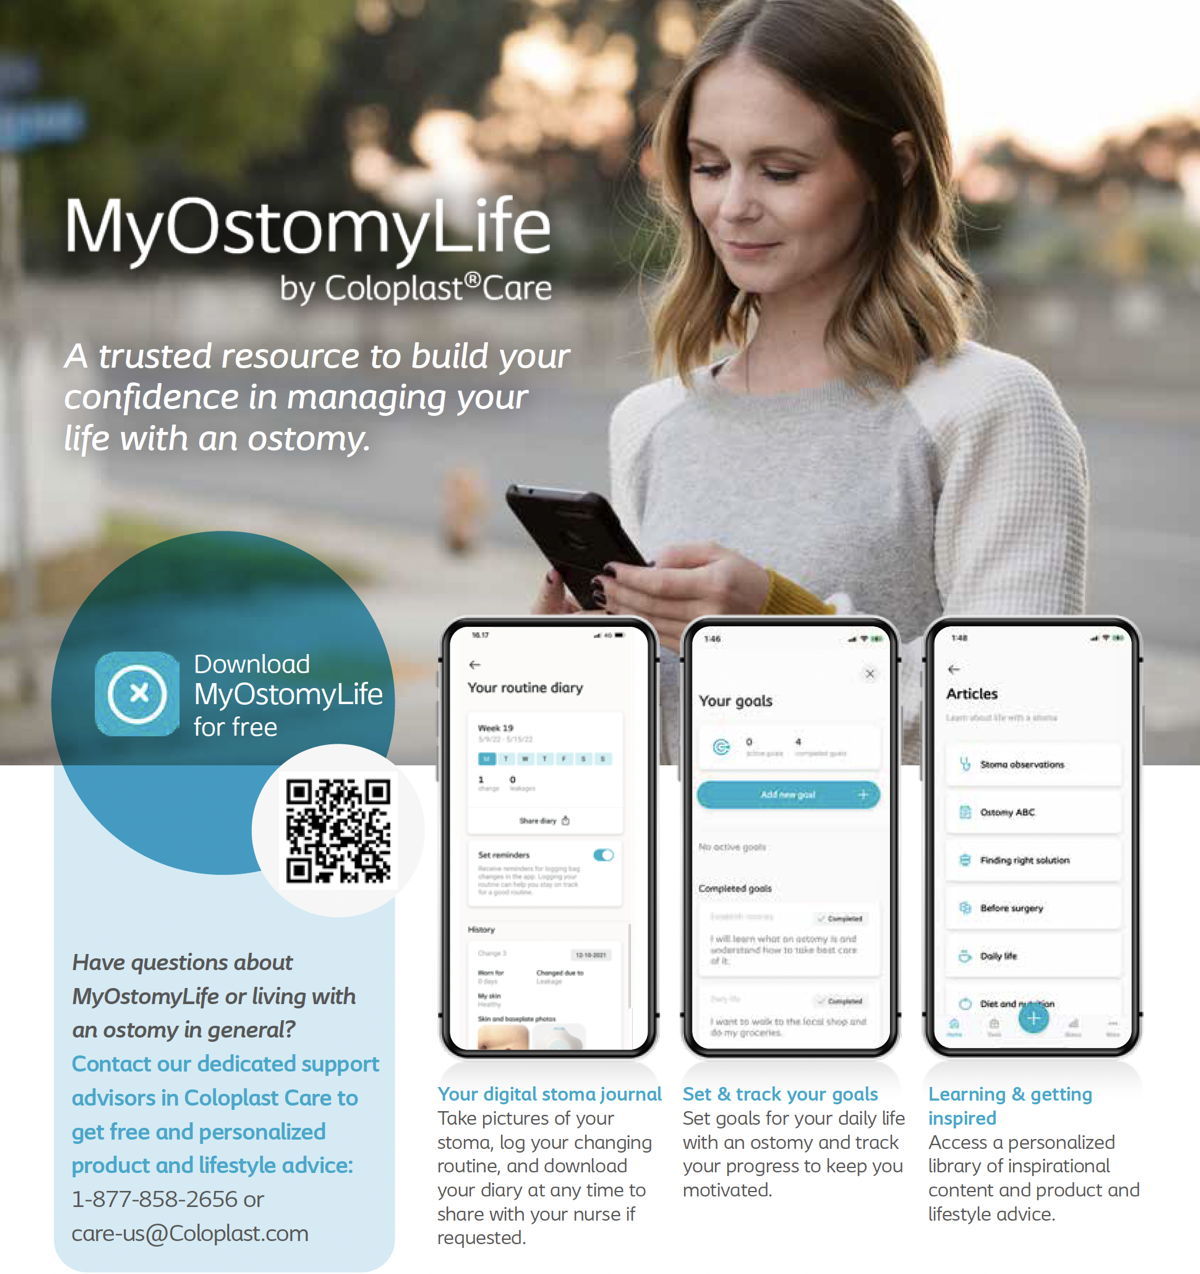 MyOstomyLife app by Coloplast Care